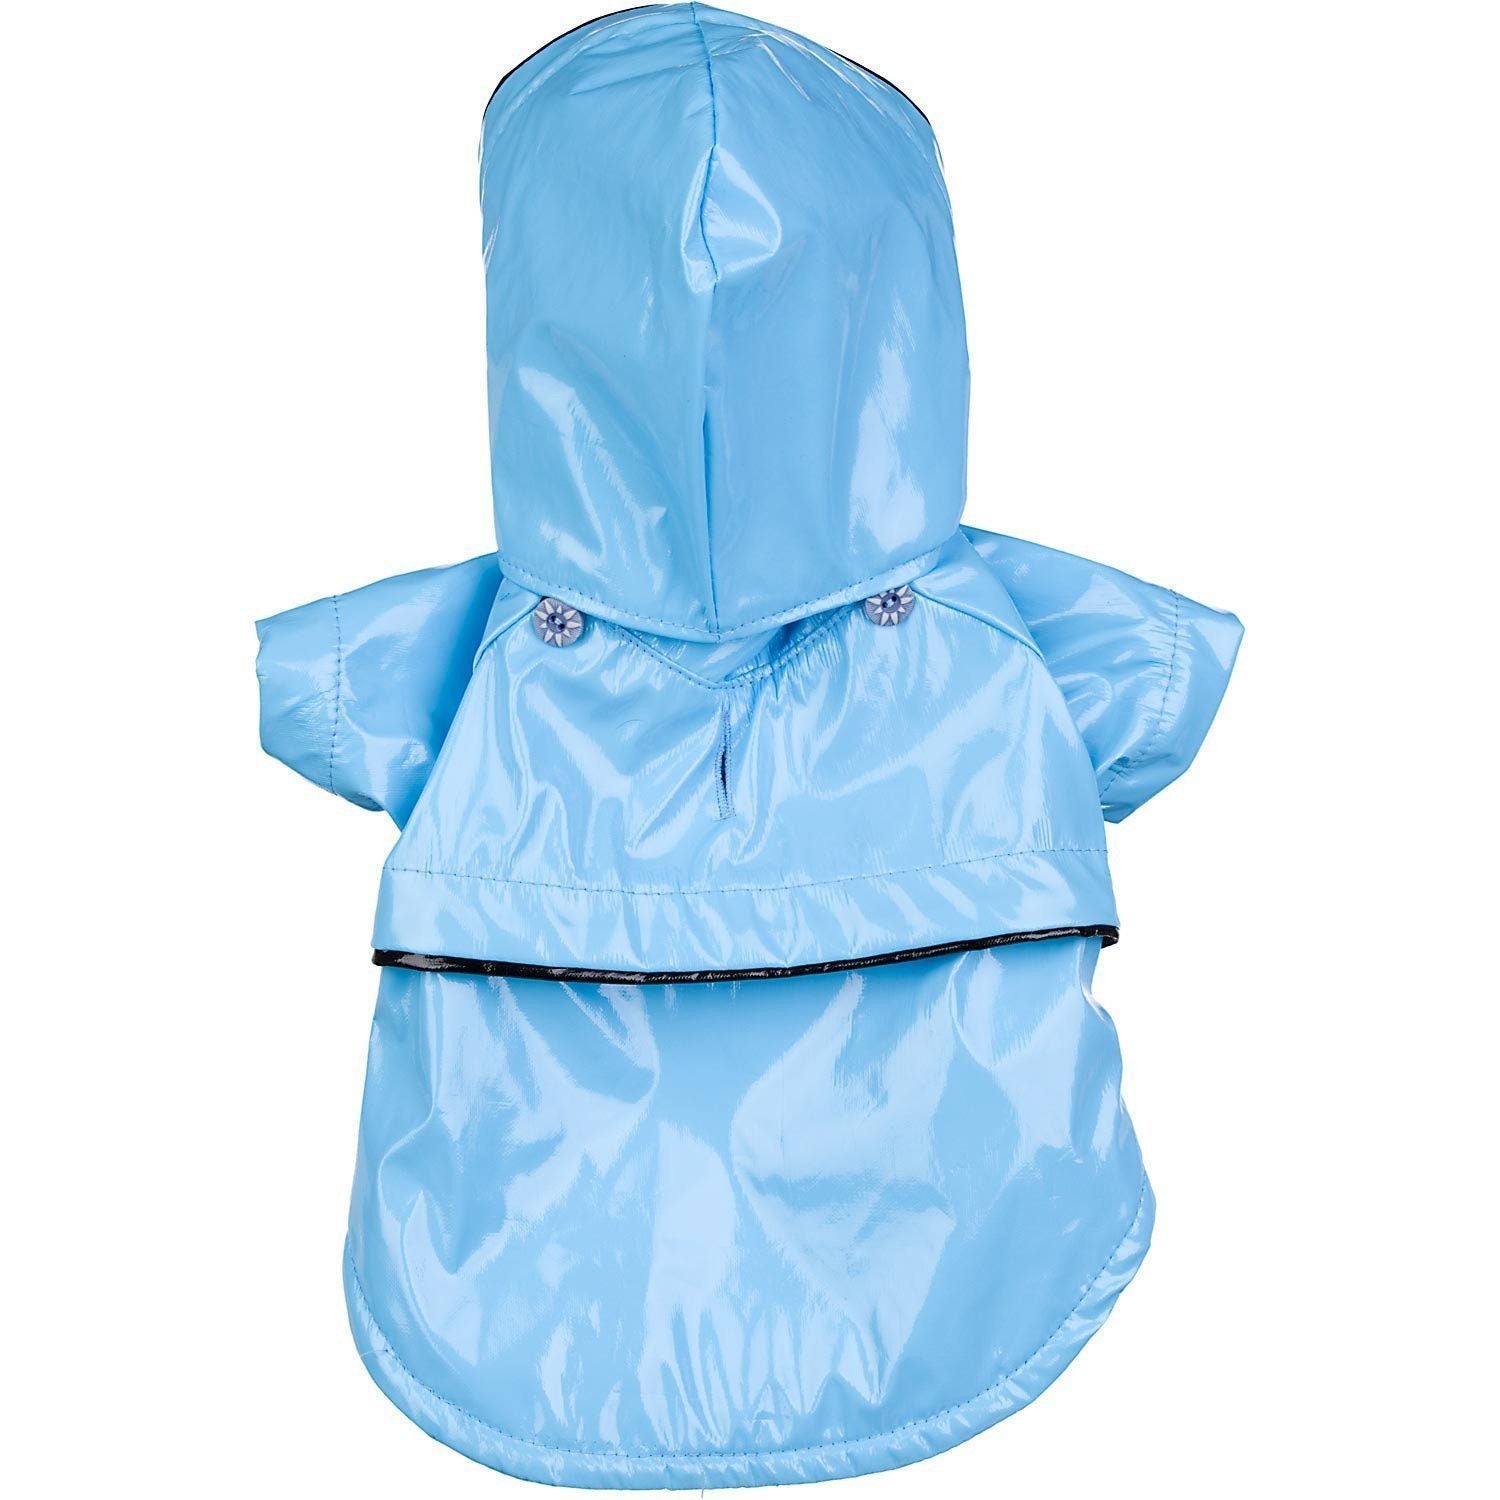 Pet Life ® 'Baby Blue' Waterproof Adjustable Dog Raincoat Jacket w/ Removable Hood X-Small 